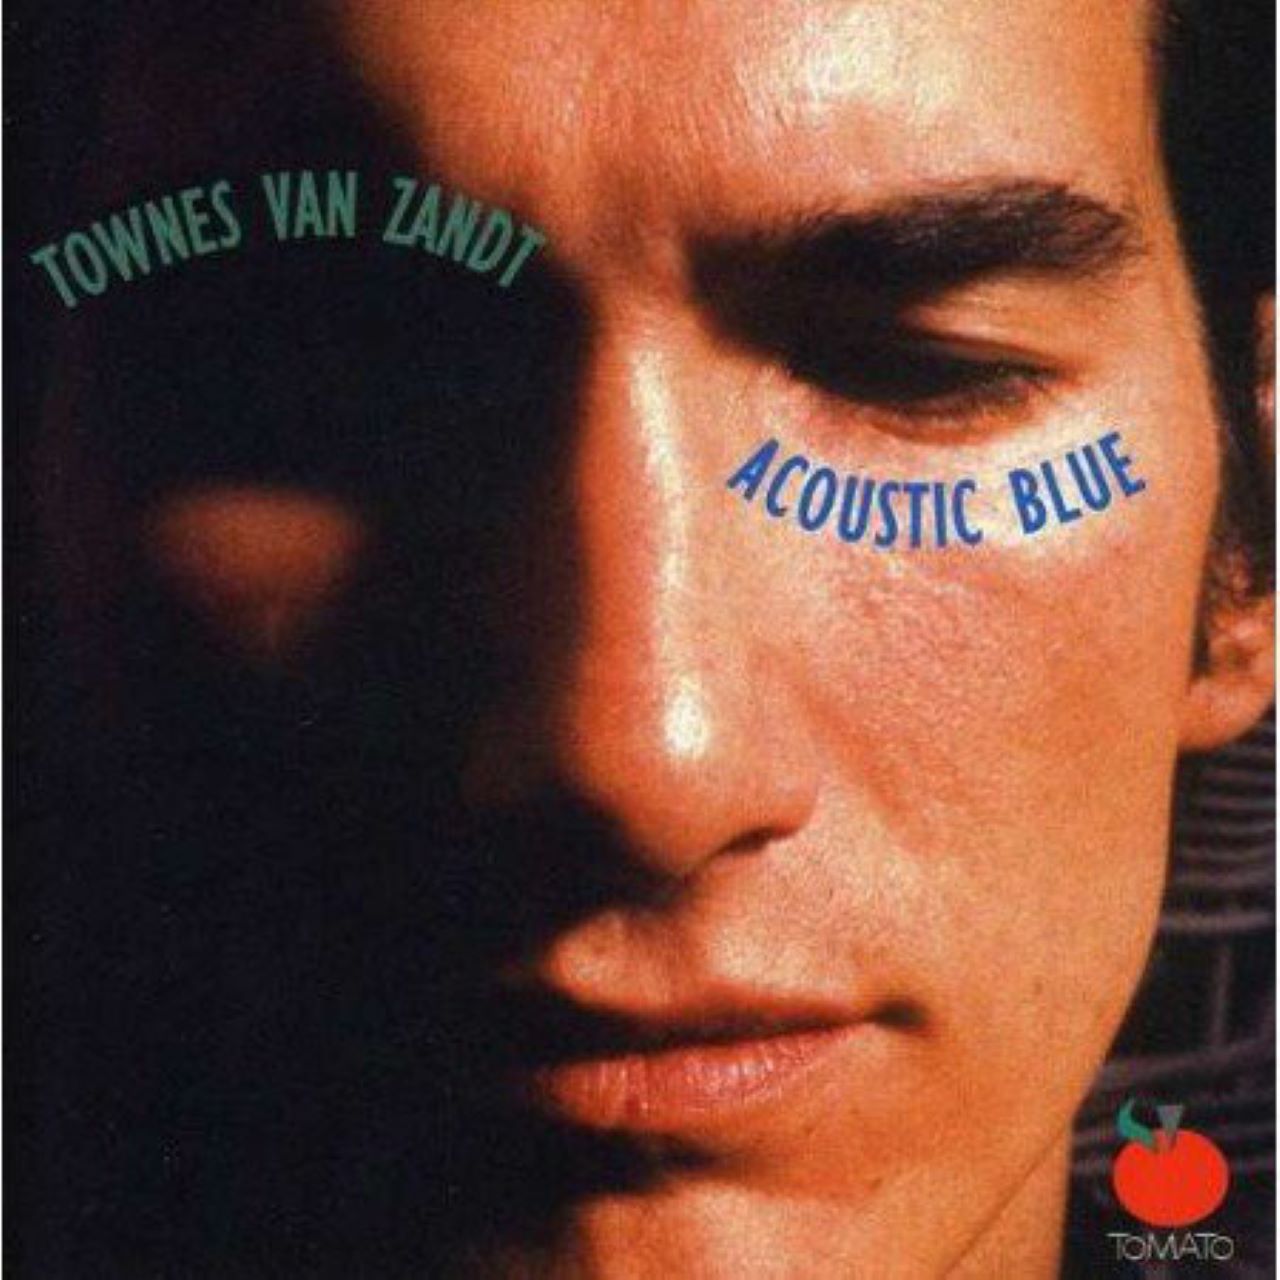 Townes Van Zandt - Acoustic Blue cover album